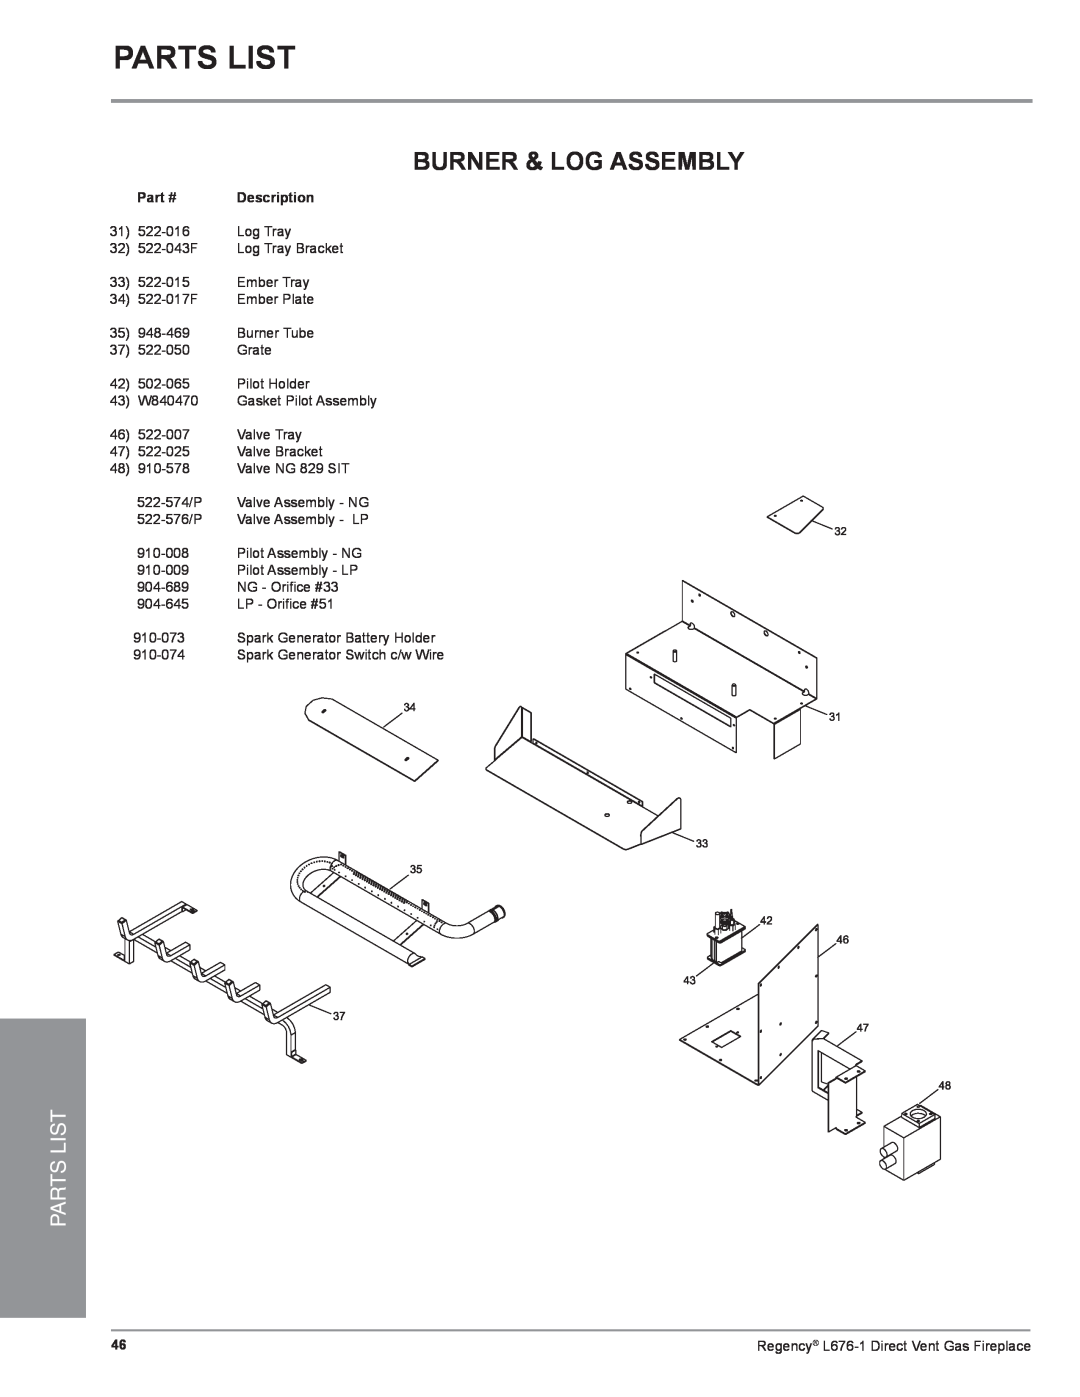 Regency L676-1, L676-NG1, L676-LP1 installation manual Parts List, Burner & Log Assembly, Part #, Description 